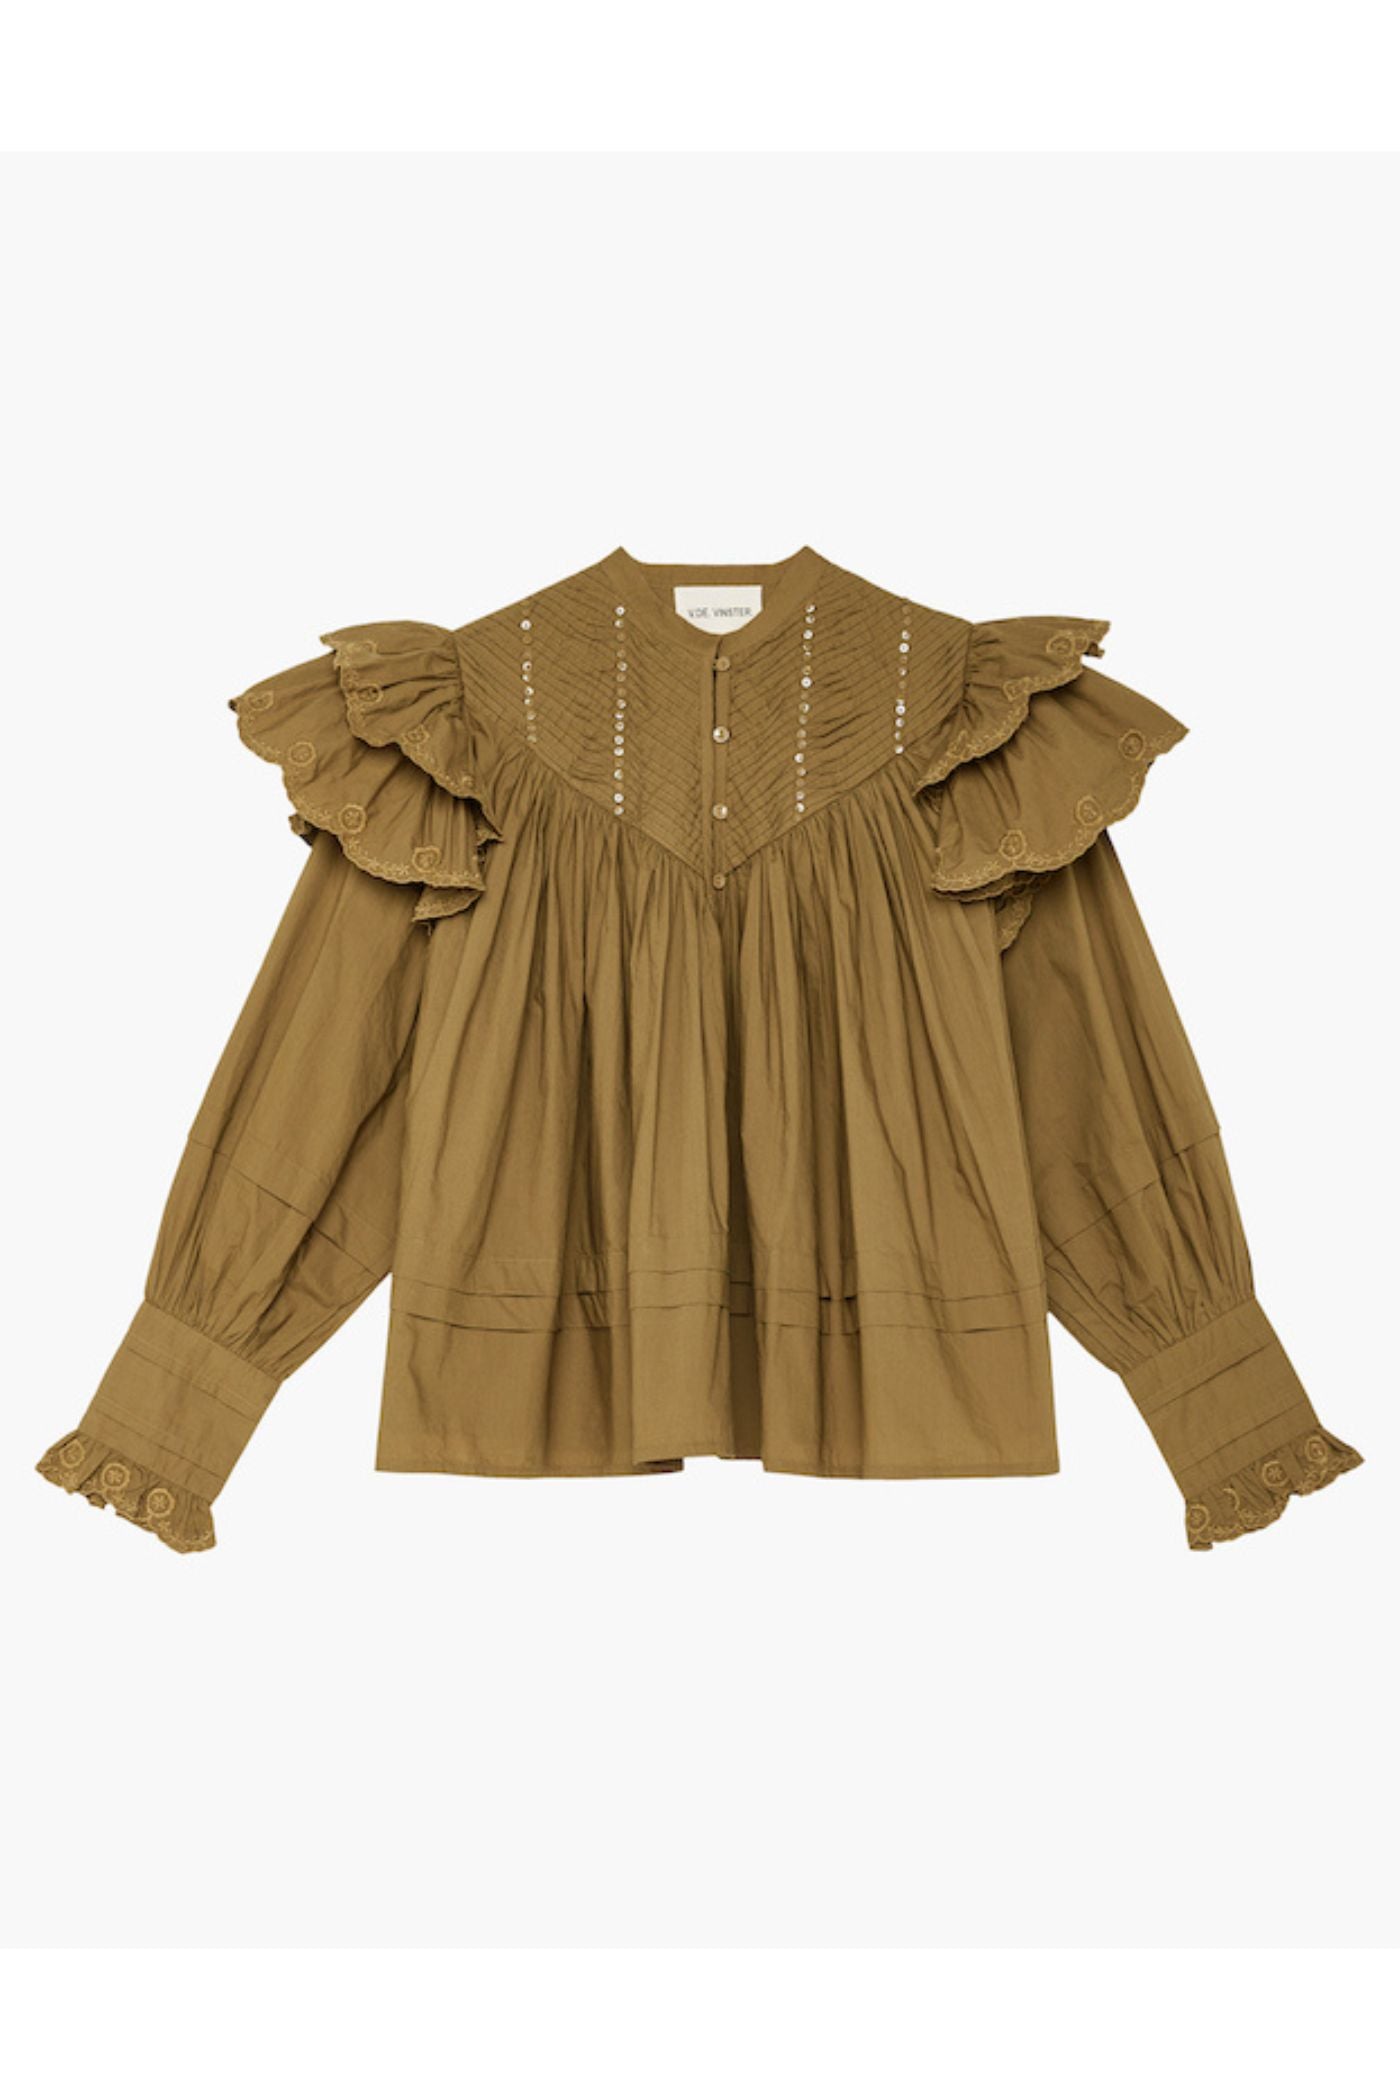 Chloé bohemian khaki ruffled blouse